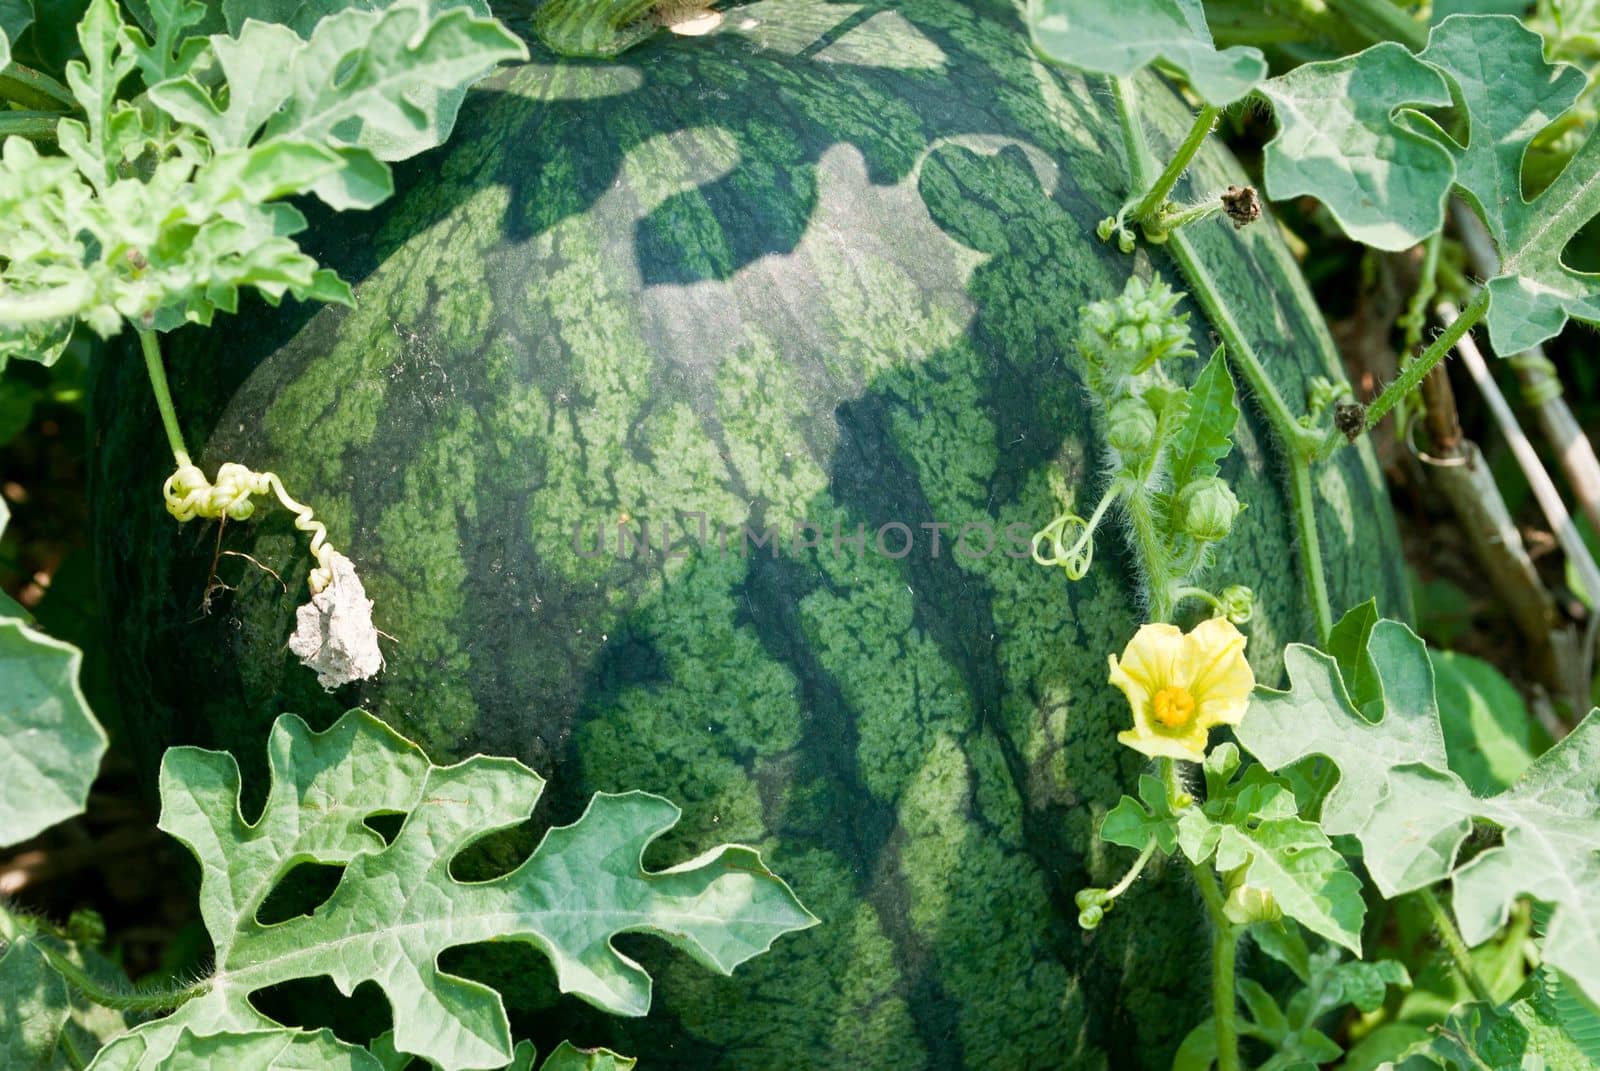 Watermelons in a vegetable garden- stock photo by rakoptonLPN